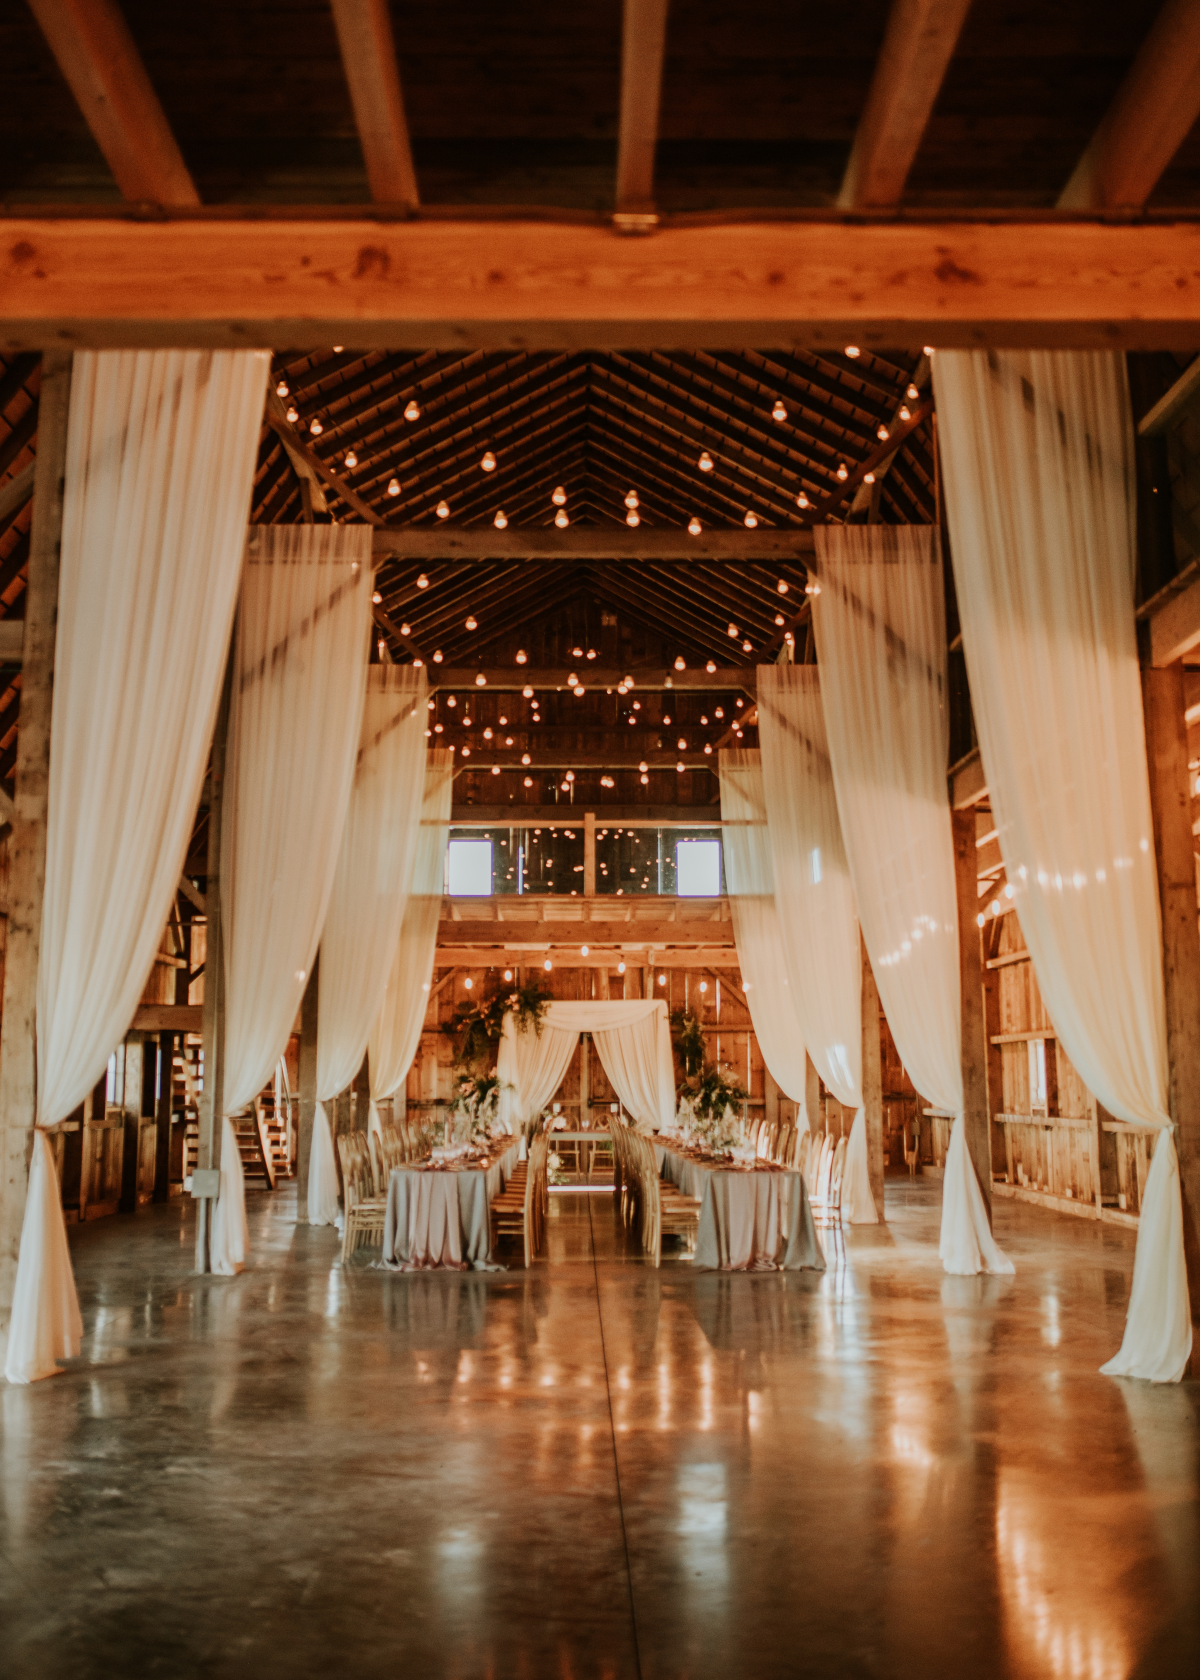 Elegant and romantic wedding reception decor at Countryside Barn, rustic, country Lethbridge, Alberta wedding venue, featured on the Brontë Bride Vendor Guide.